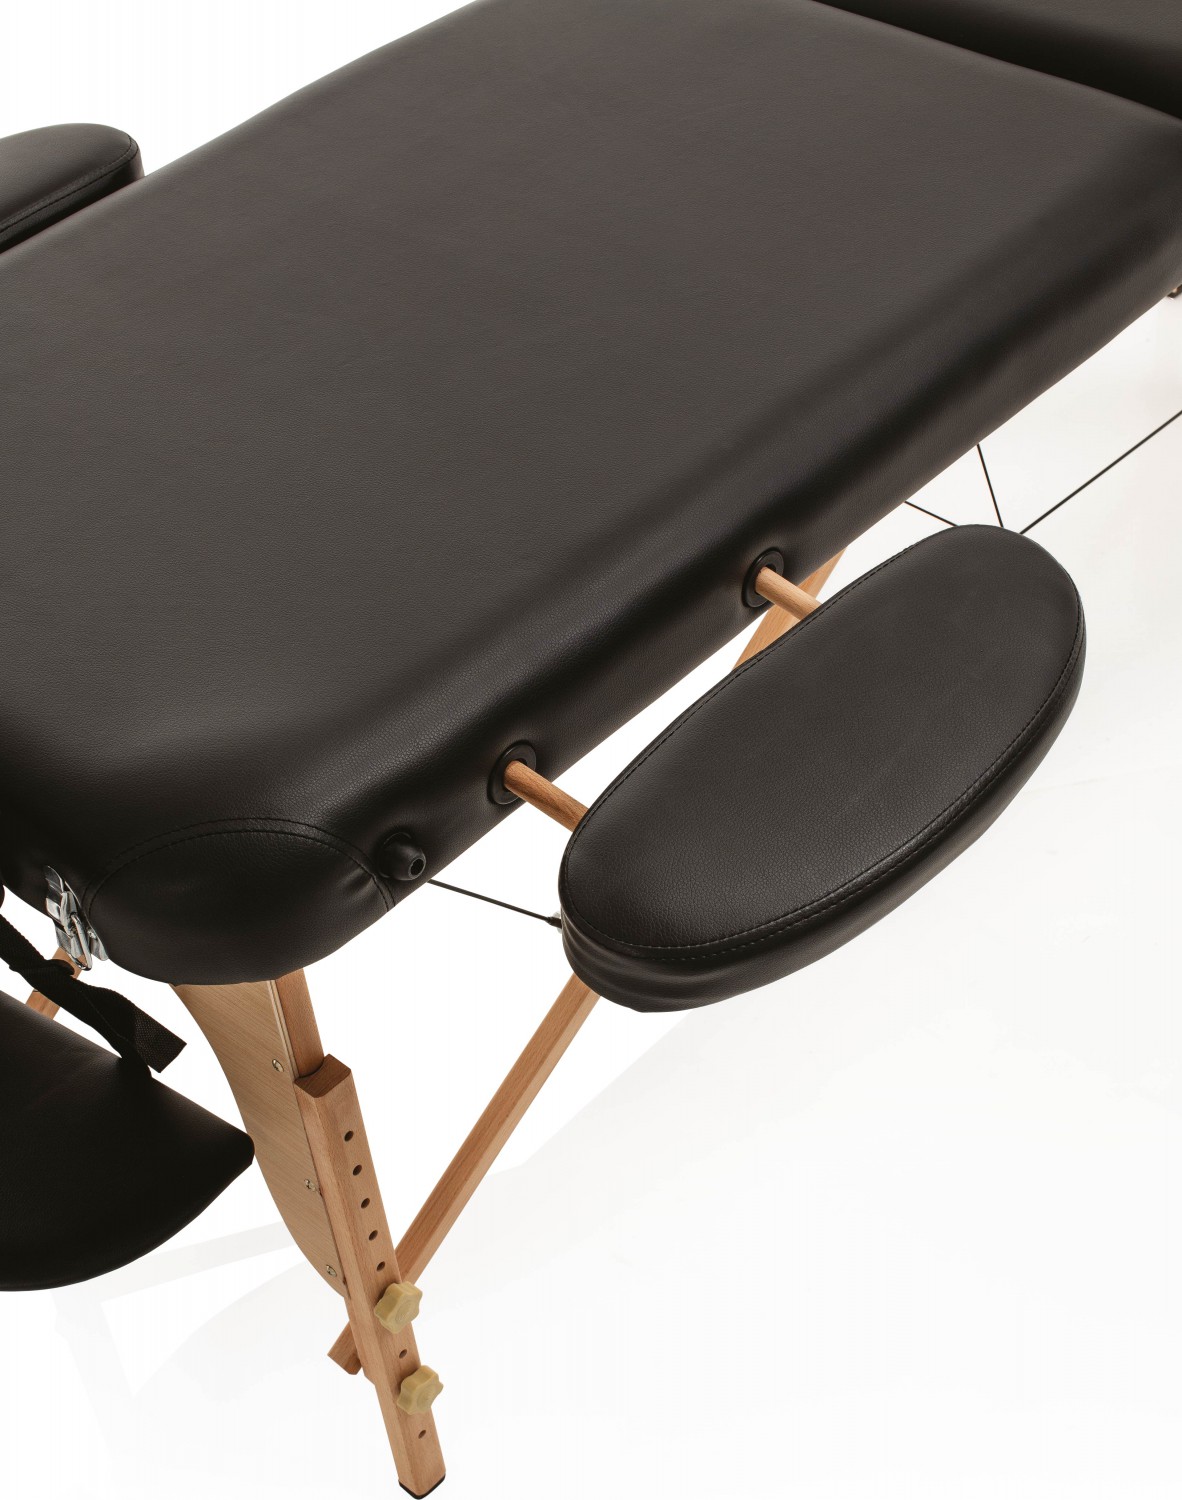  XanitaliaPro Master Confort Wood Table de massage portable, noir 